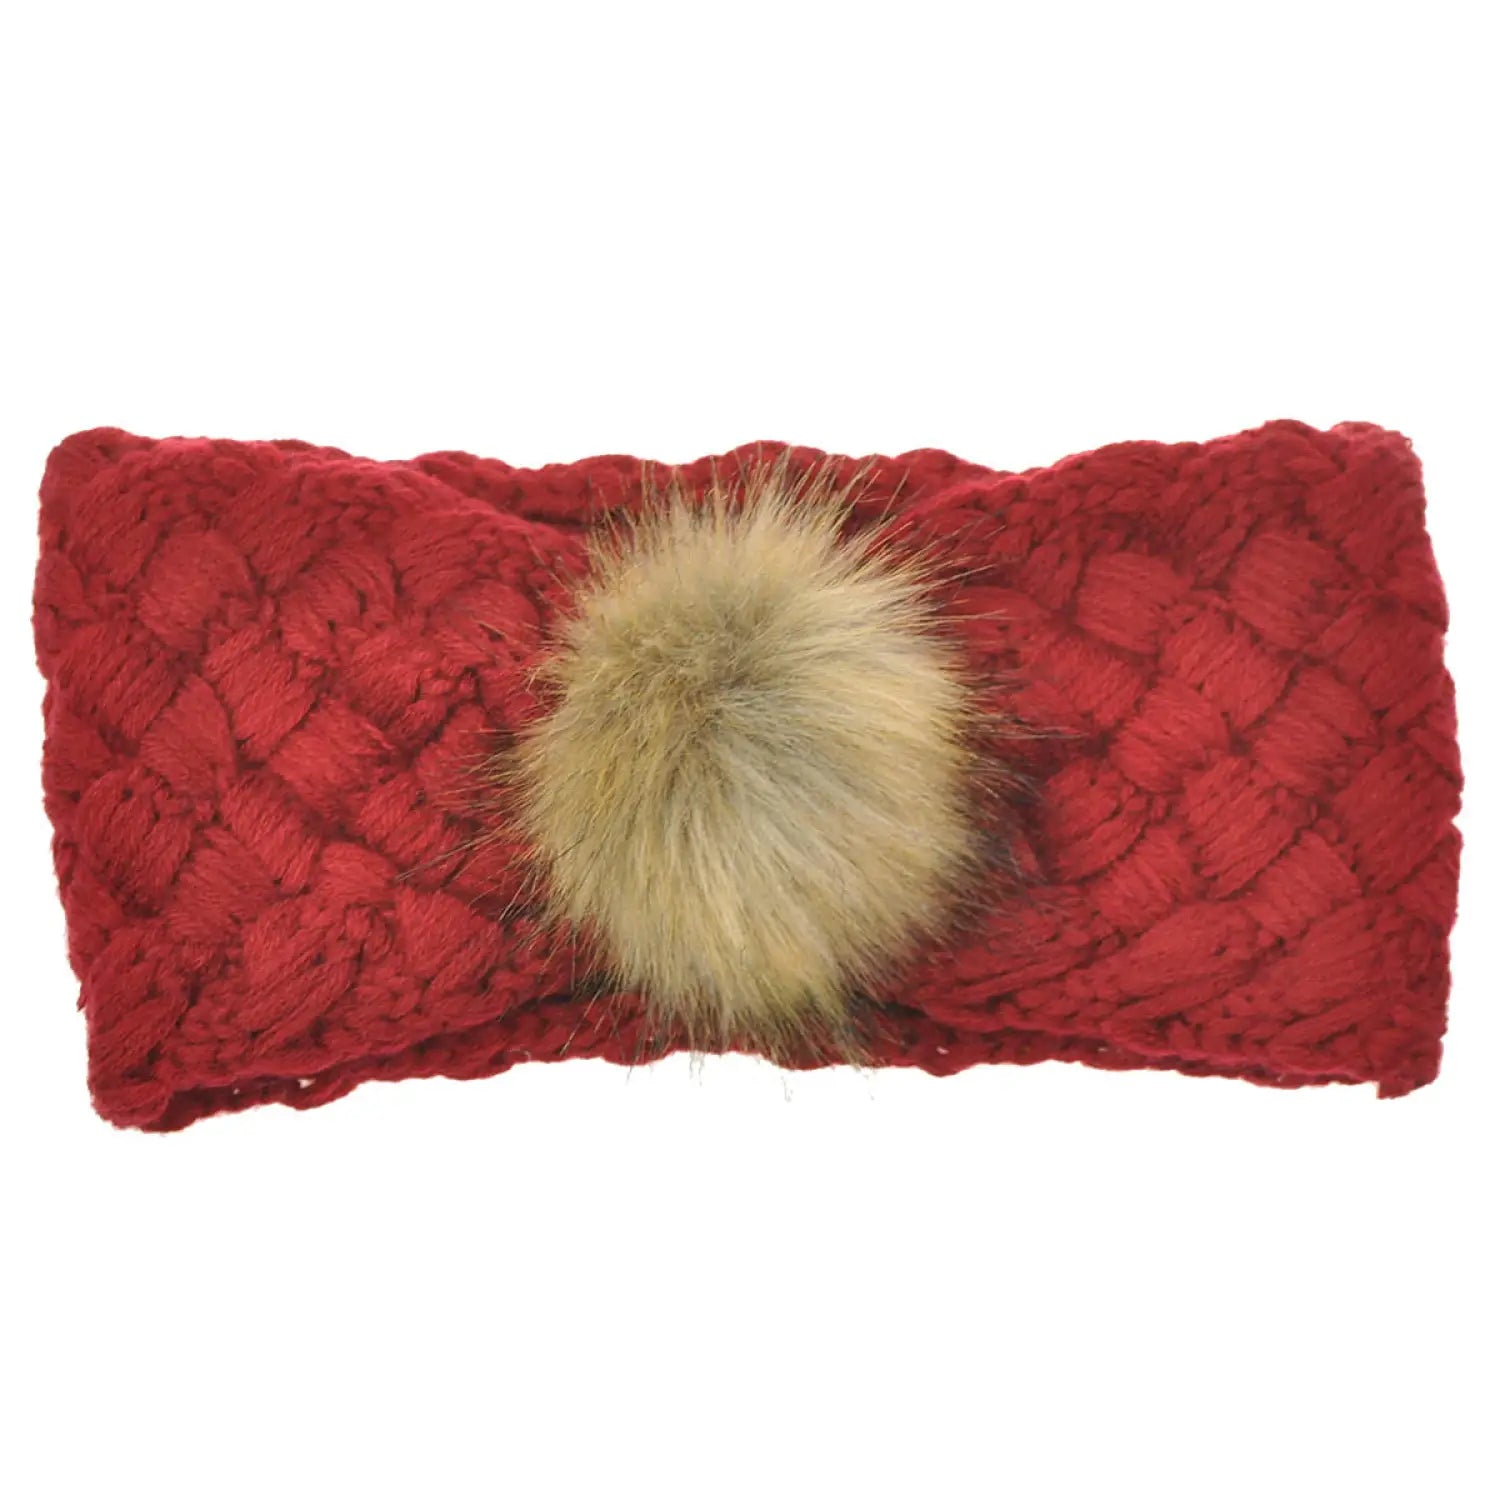 Faux fur pom pom headband - Autumn & Winter accessory